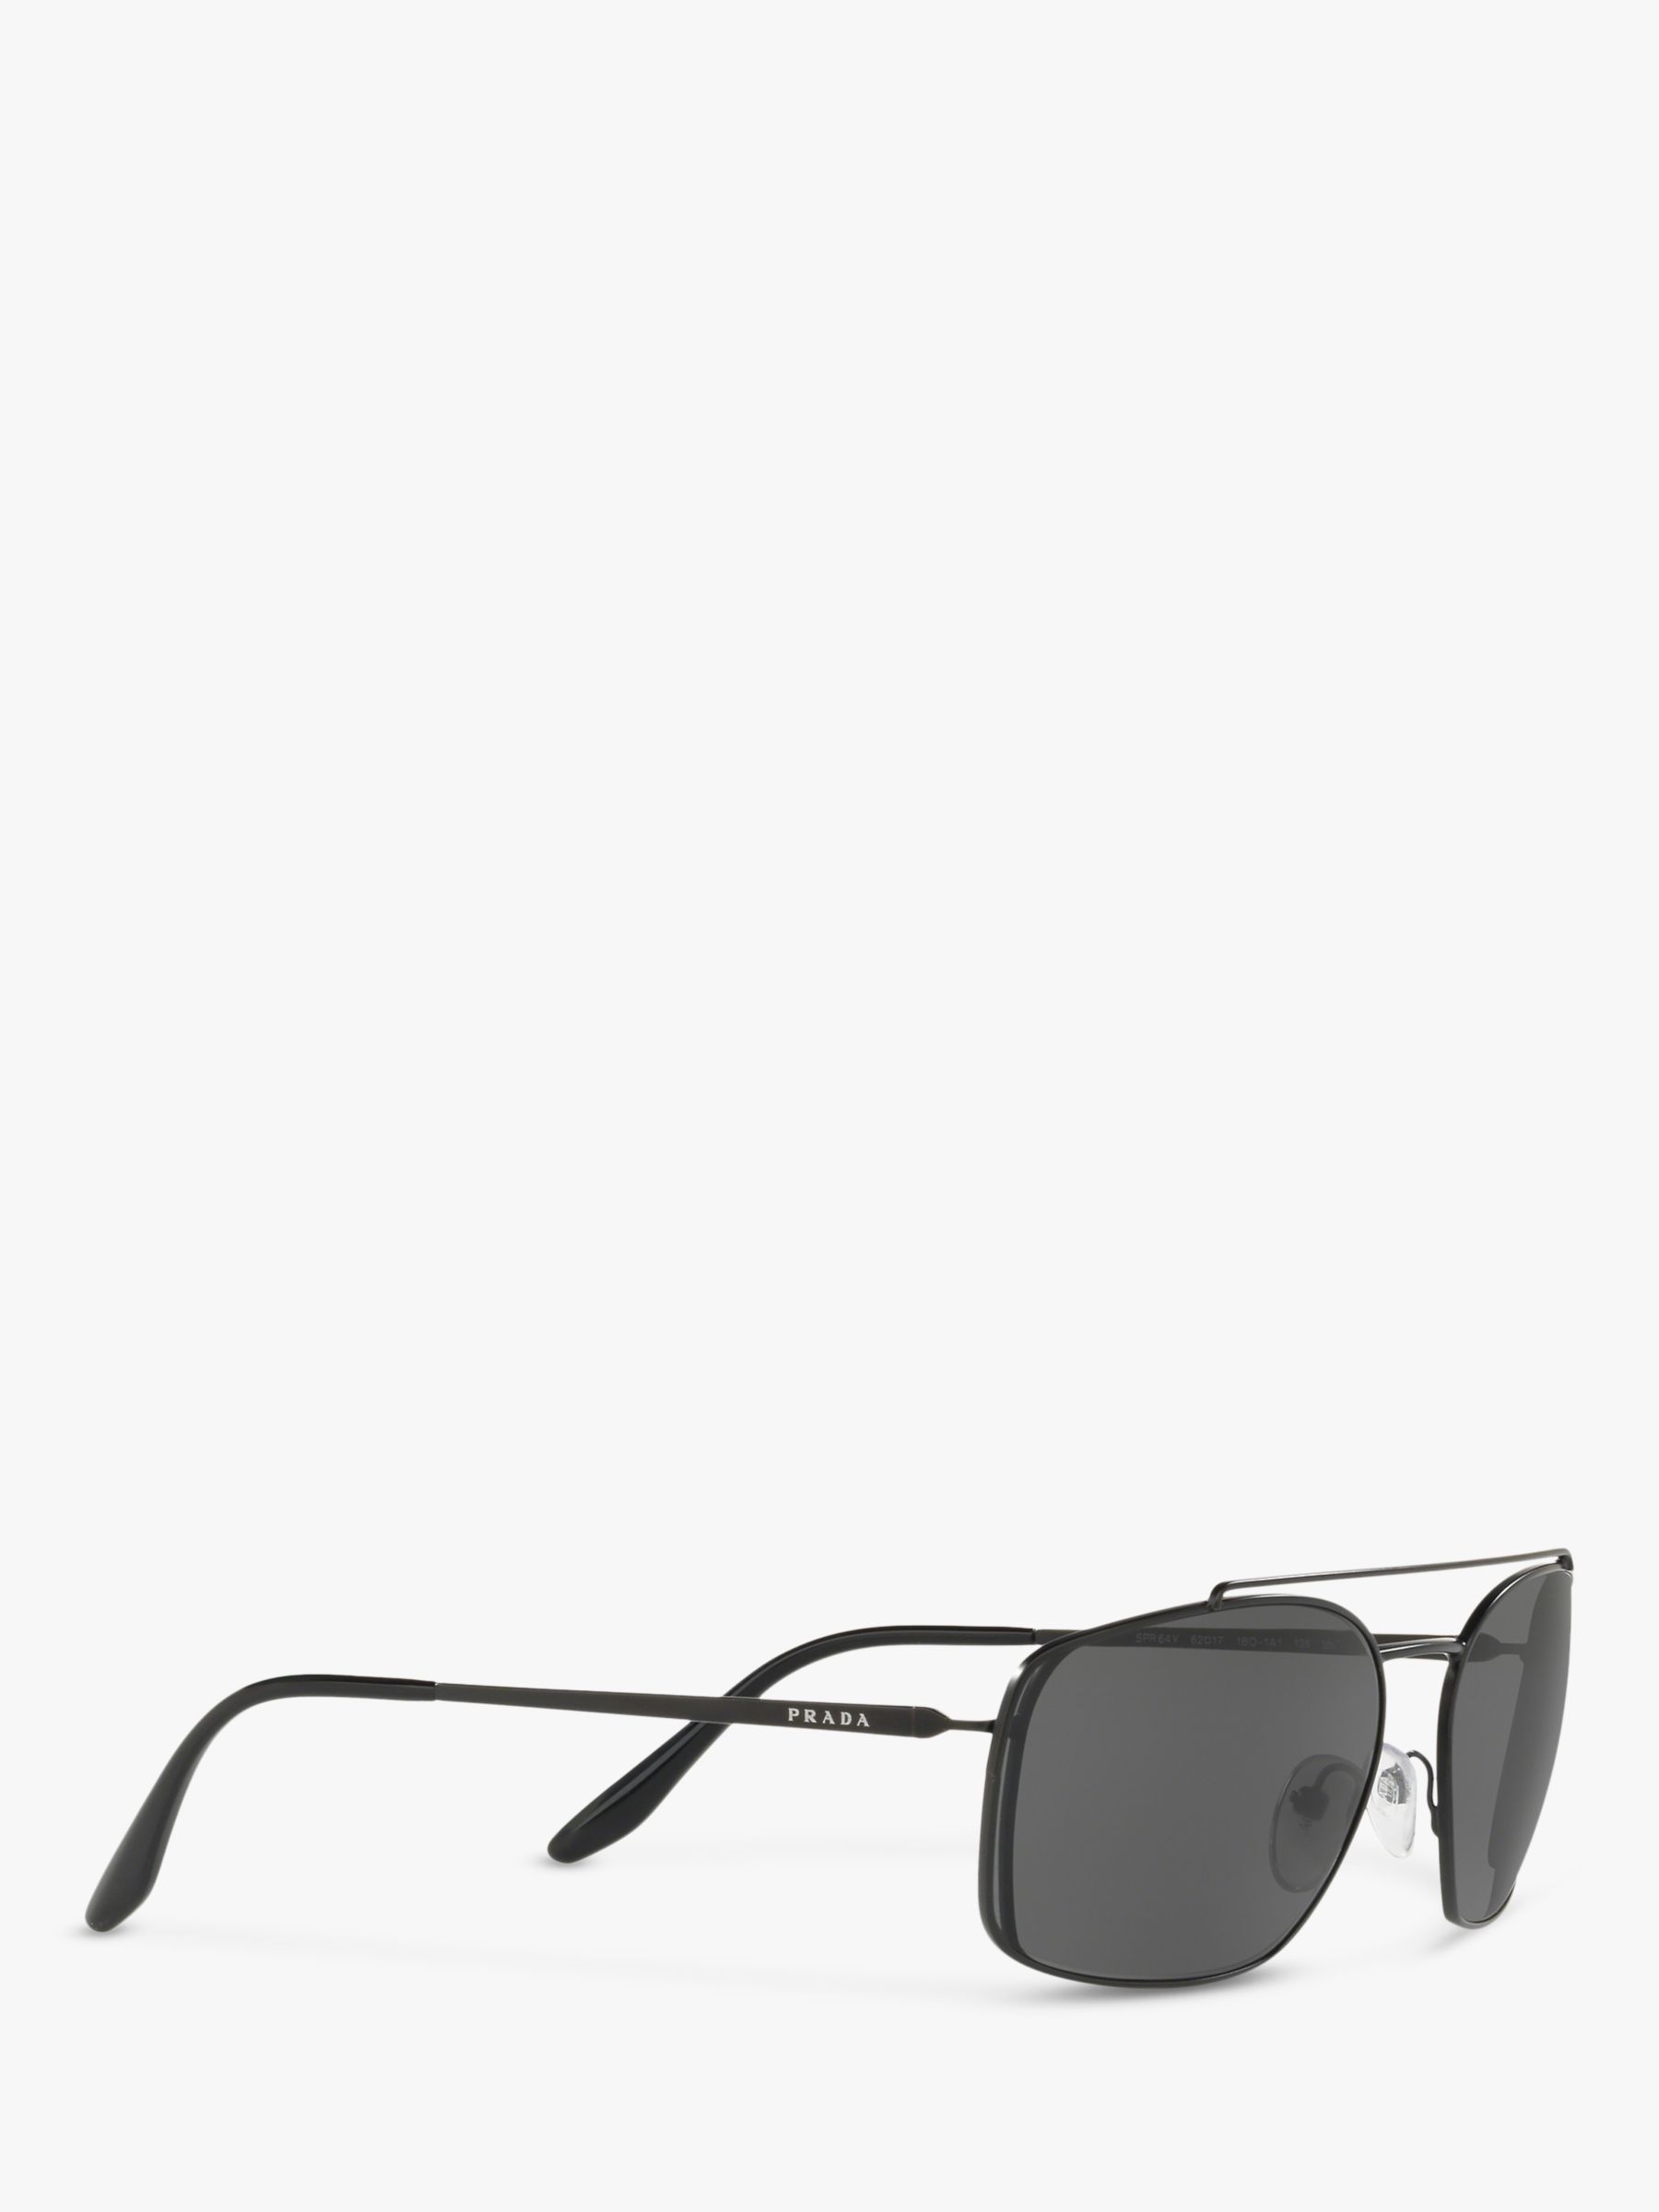 Prada PR 64VS Men's Rectangular Sunglasses, Black/Grey